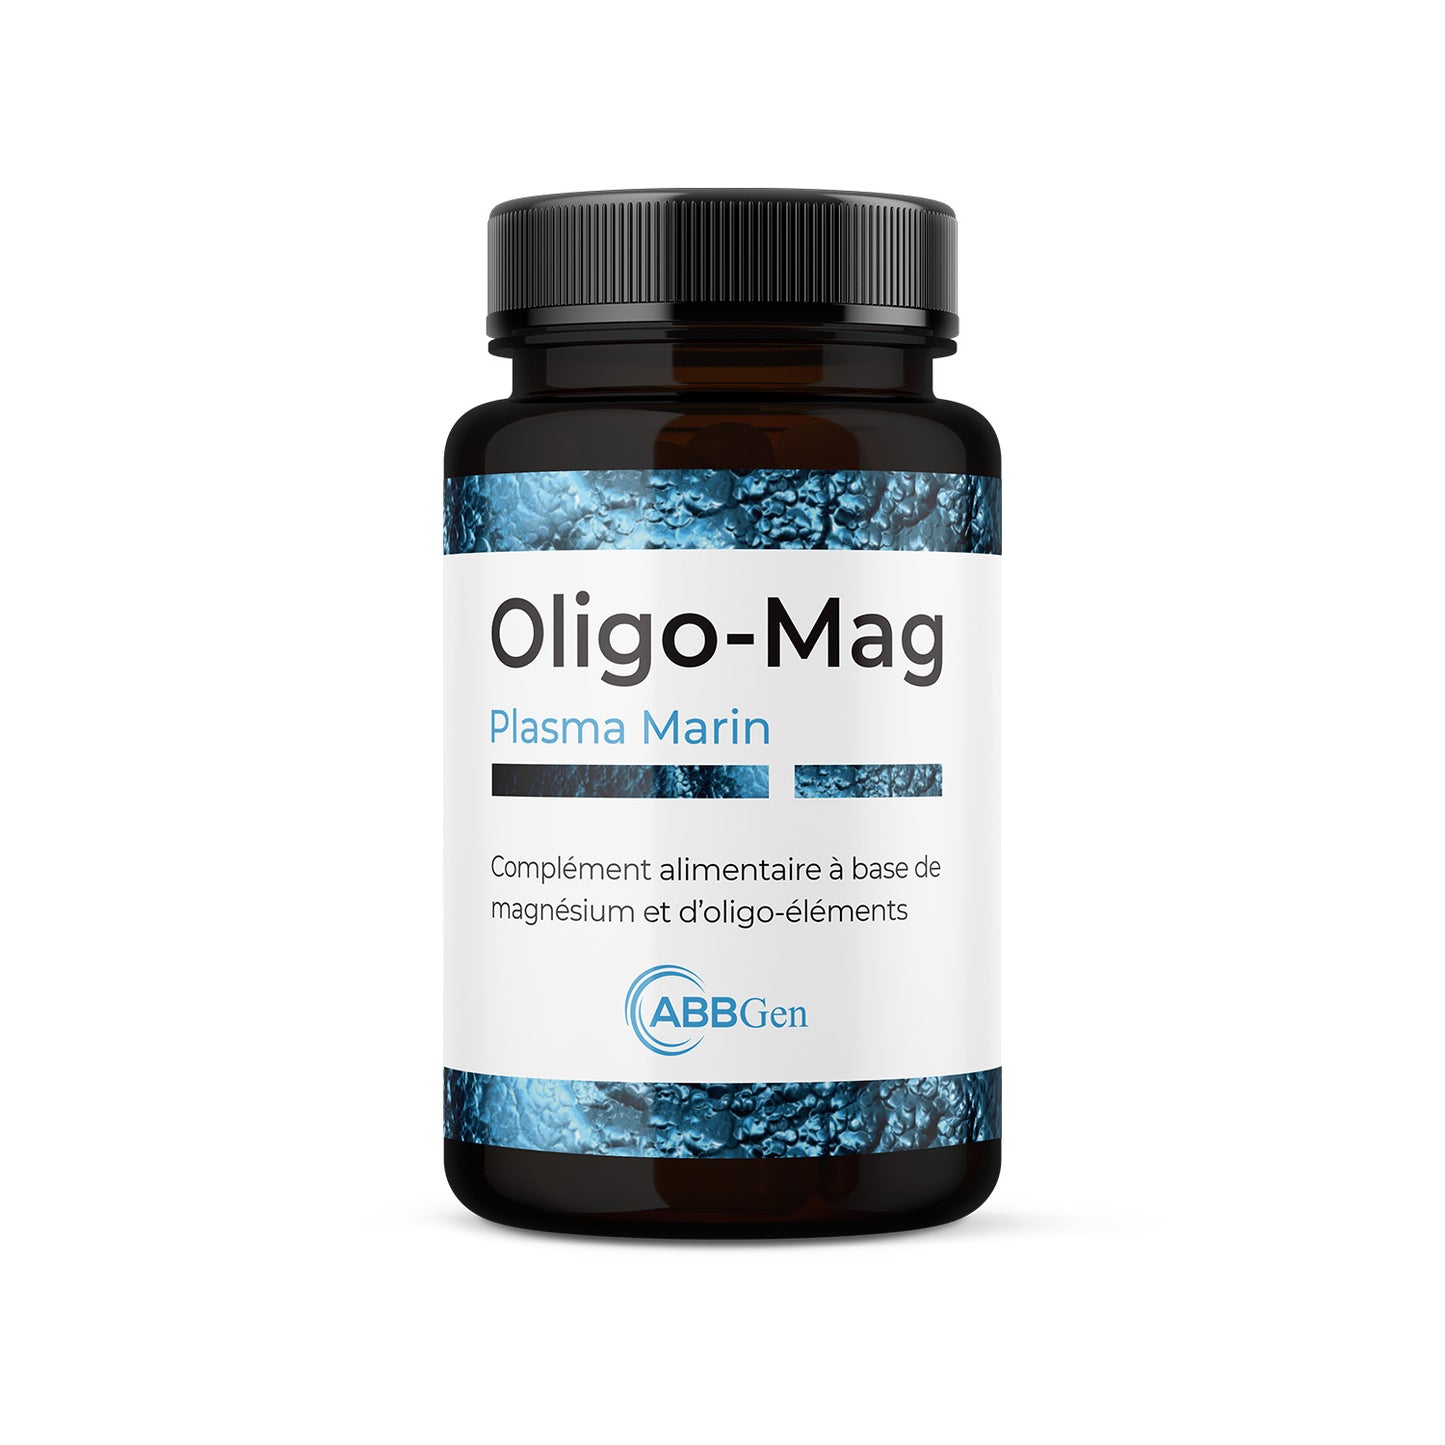 Oligo-Mag - Marine Plasma - Minerals - Trace Elements